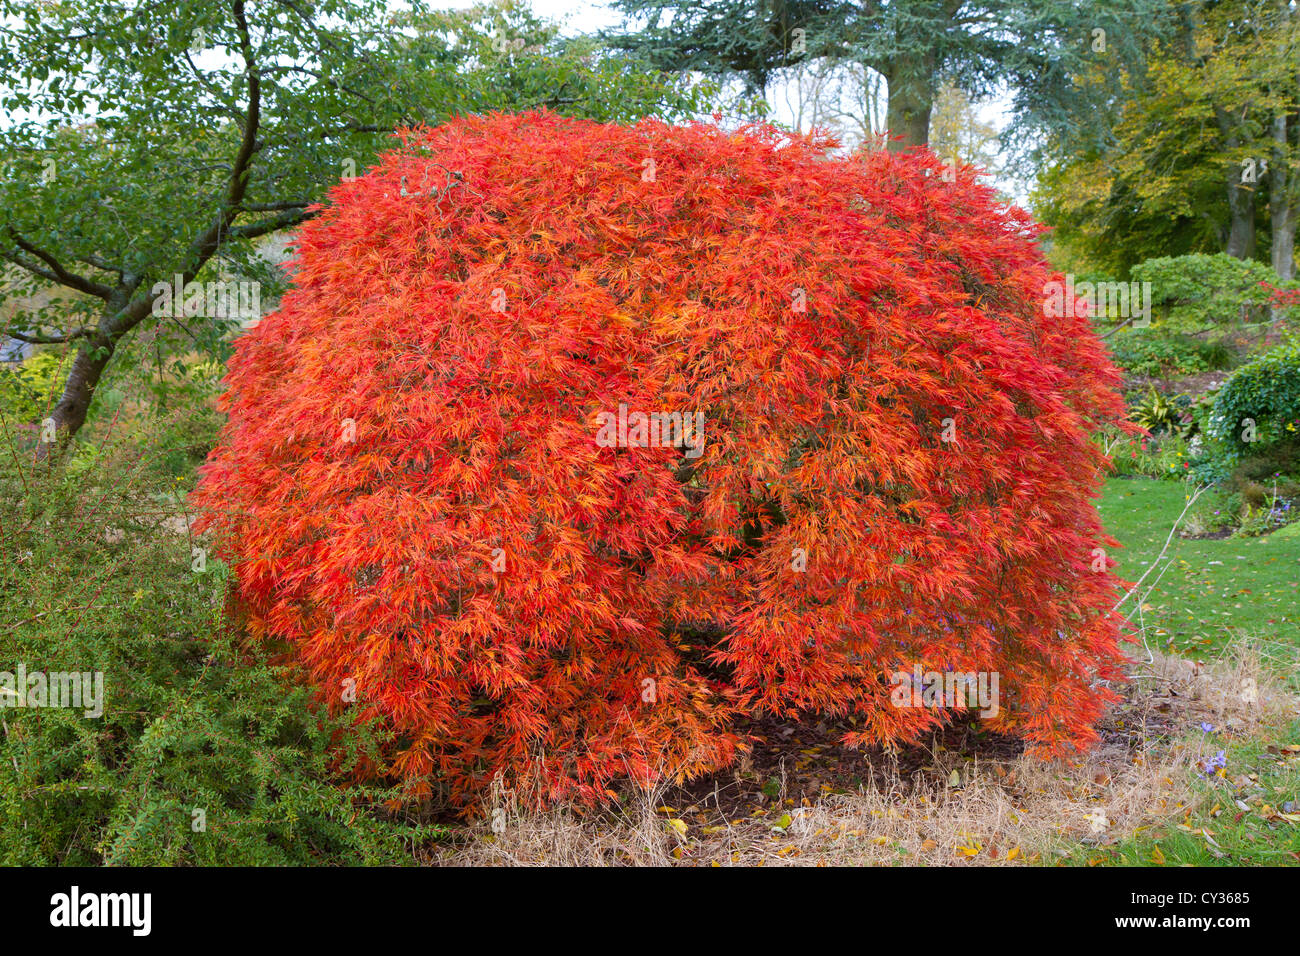 Acer Pazmatum tree otherwise known as Japanese Maple Stock Photo